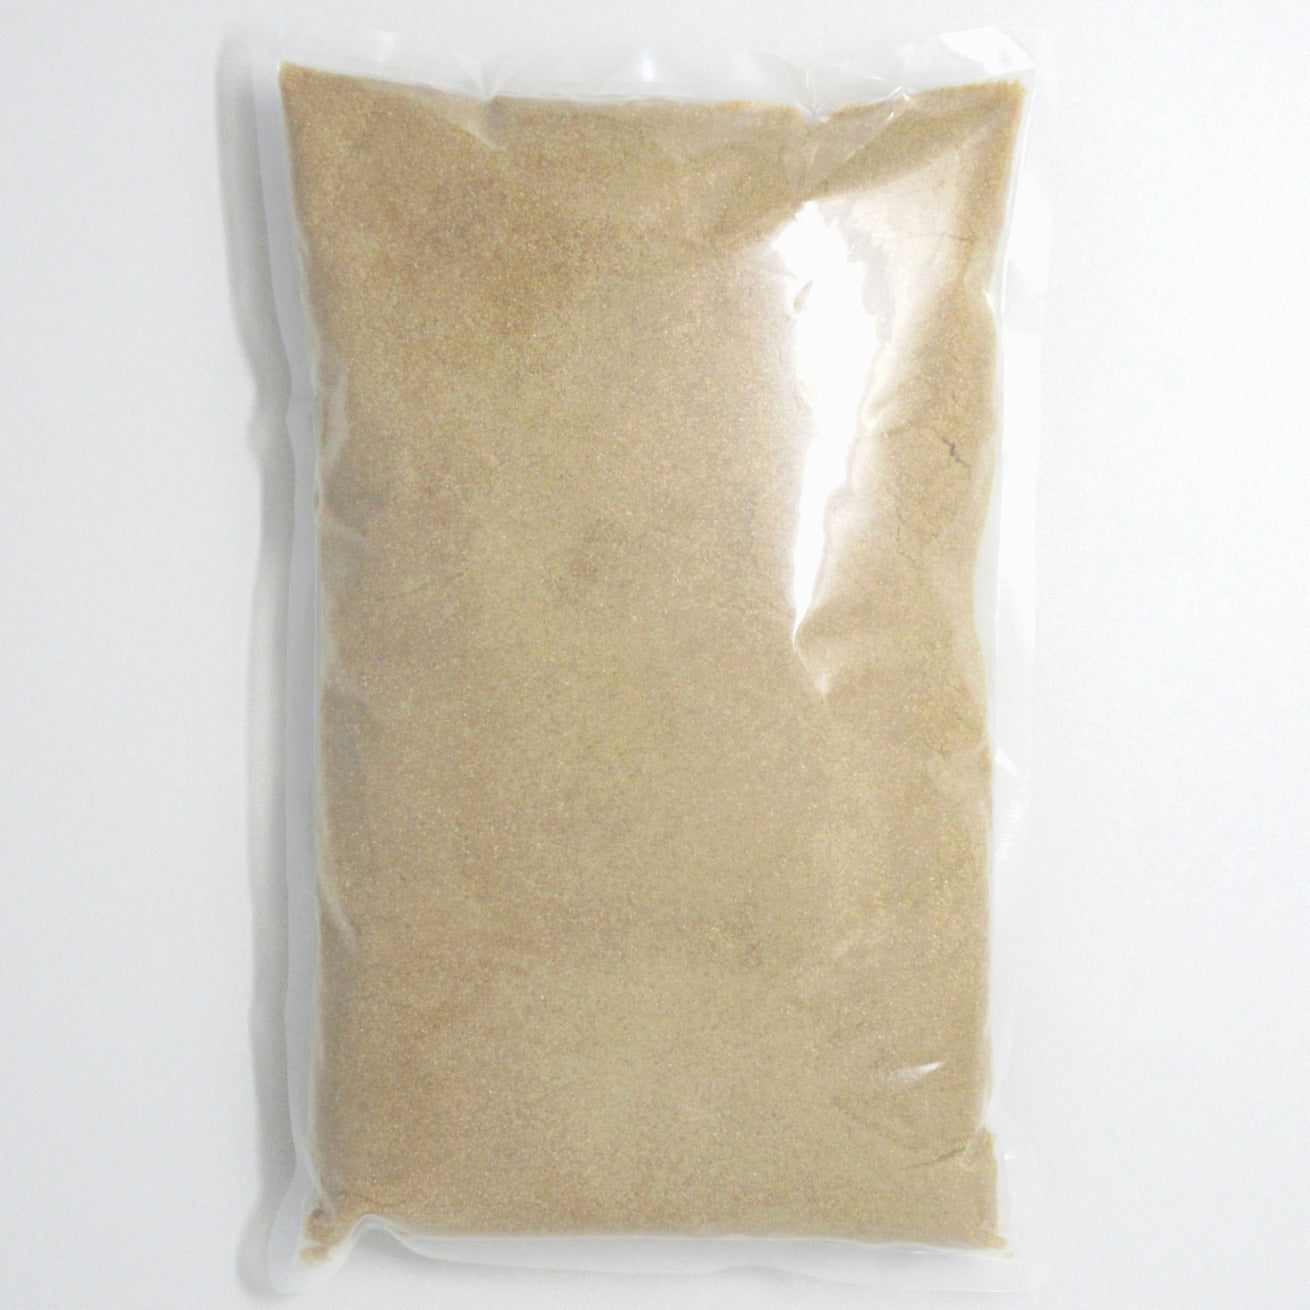 Flour Barrel product image - Dark Brown Sugar